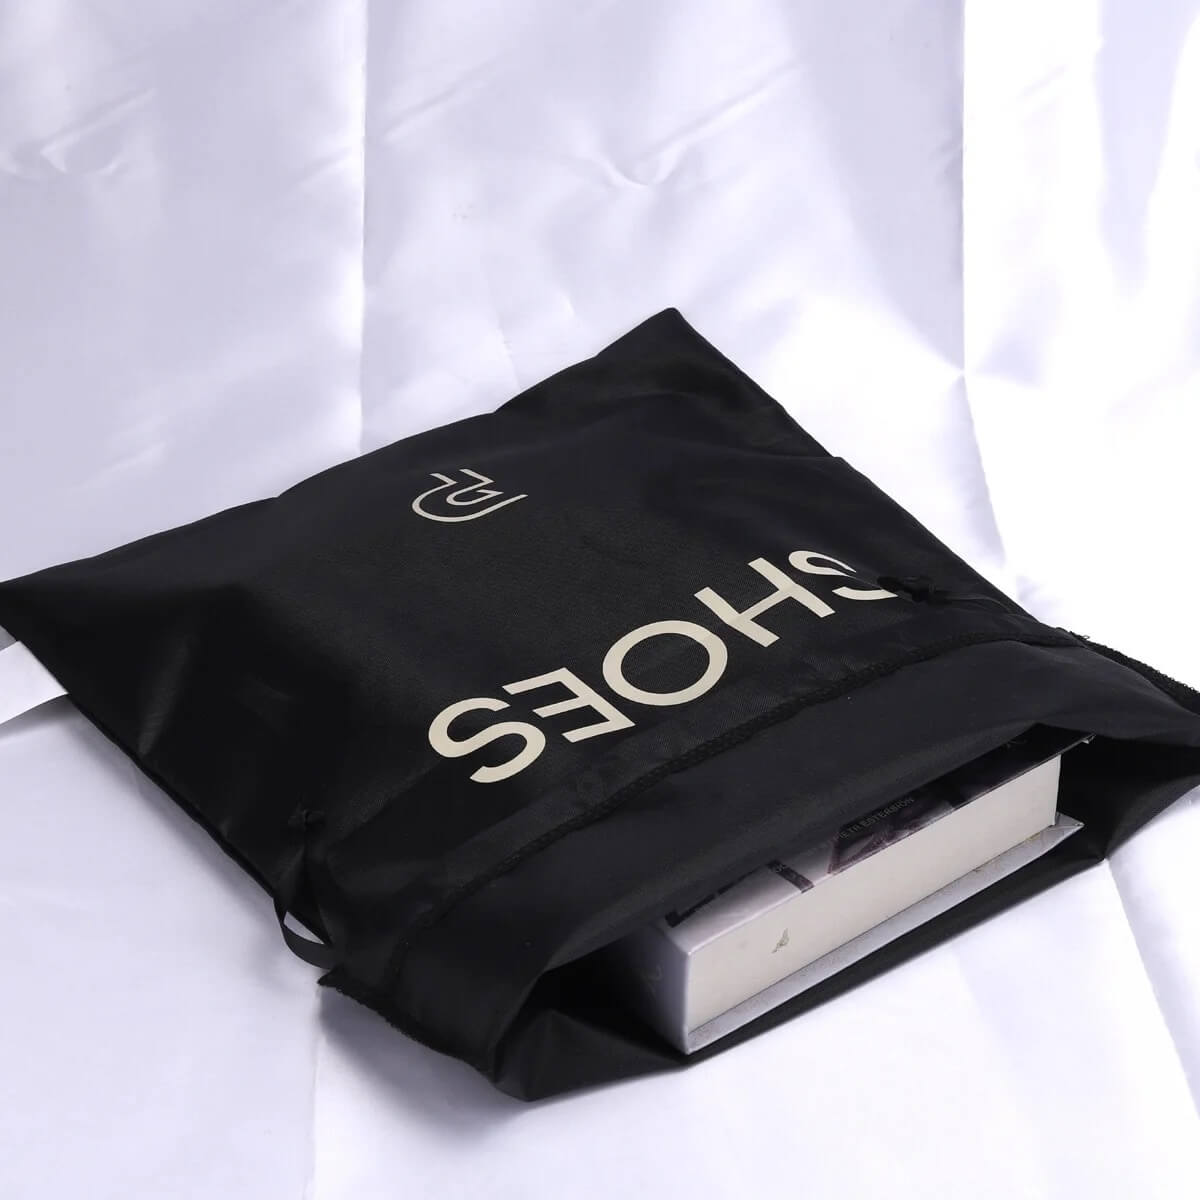 Cute design polyester cloth shoe traveling drawstring bag